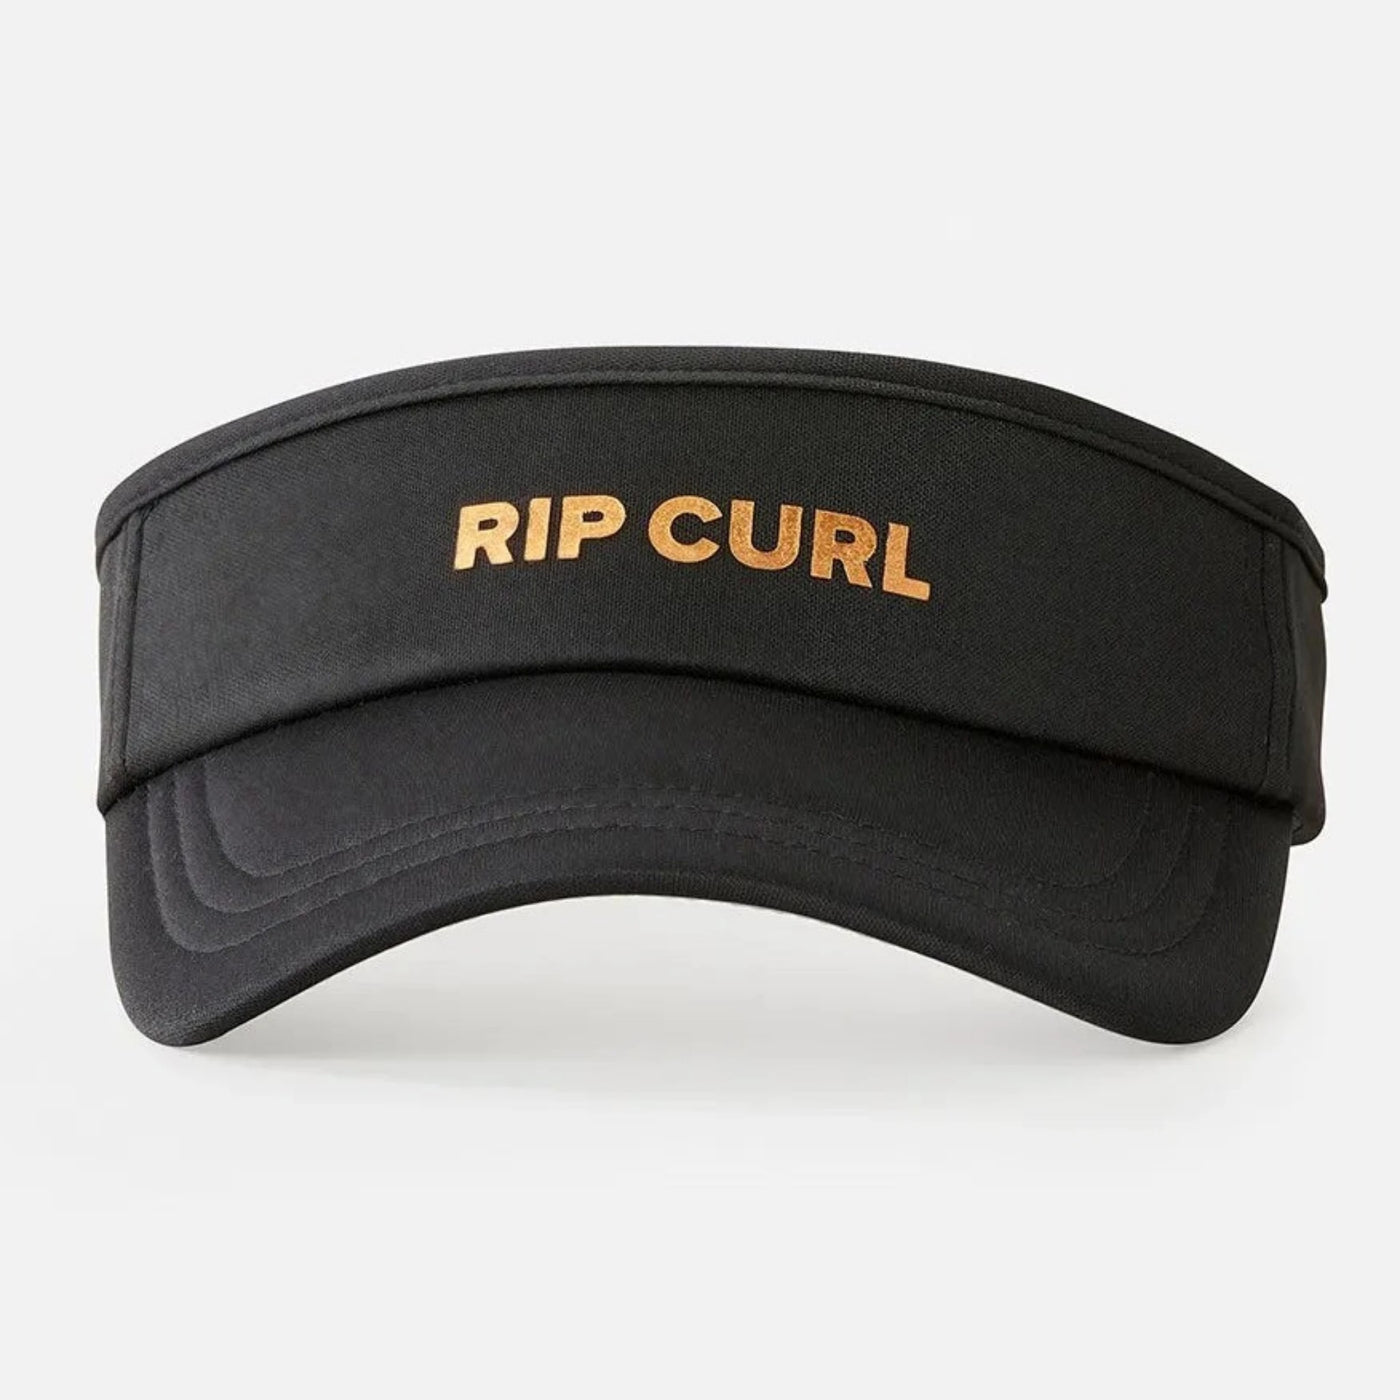 Rip Curl Women's Classic Foil Visor